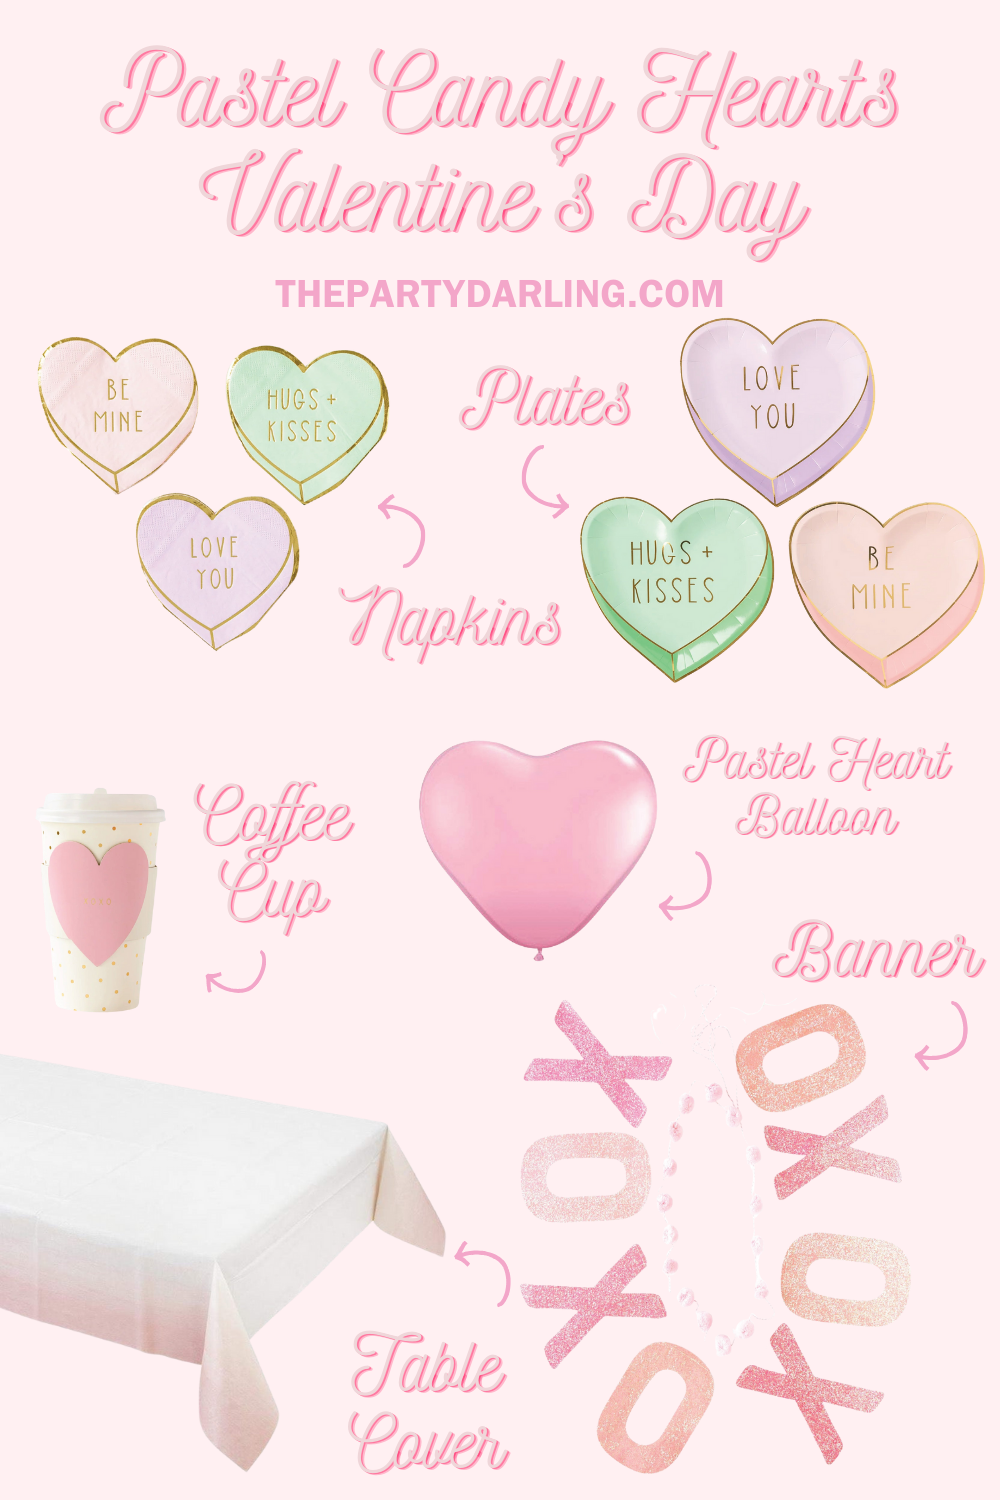 24ct Pink Heart Sticker Sheets